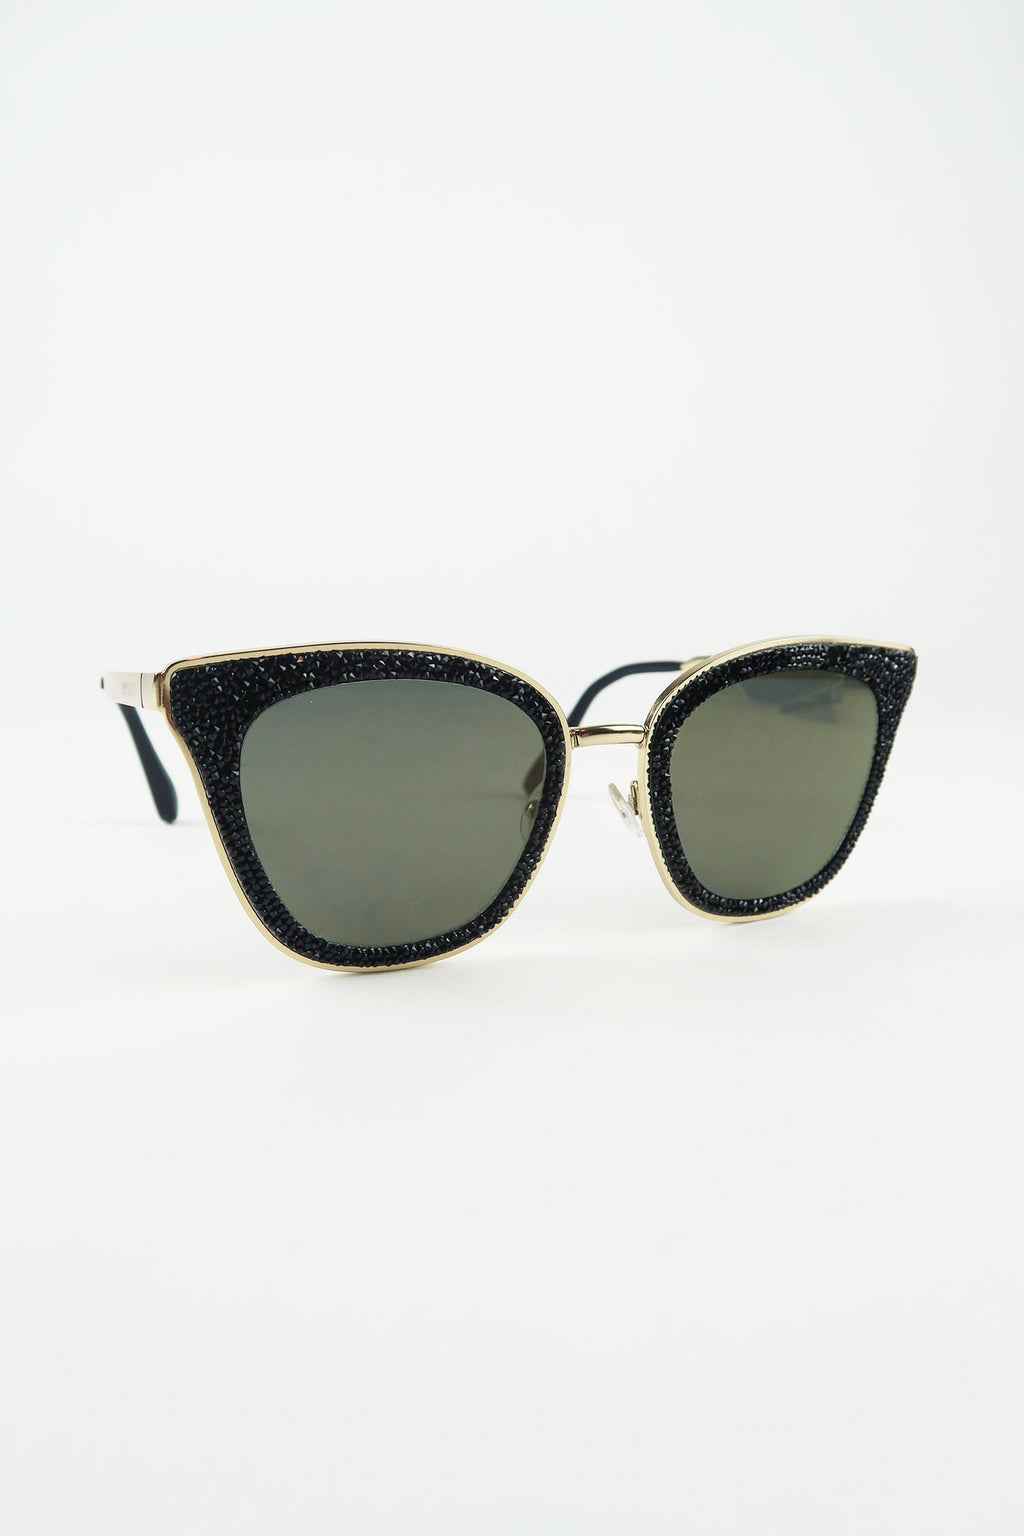 Jimmy Choo Black Glitter Lizzy Sunglasses